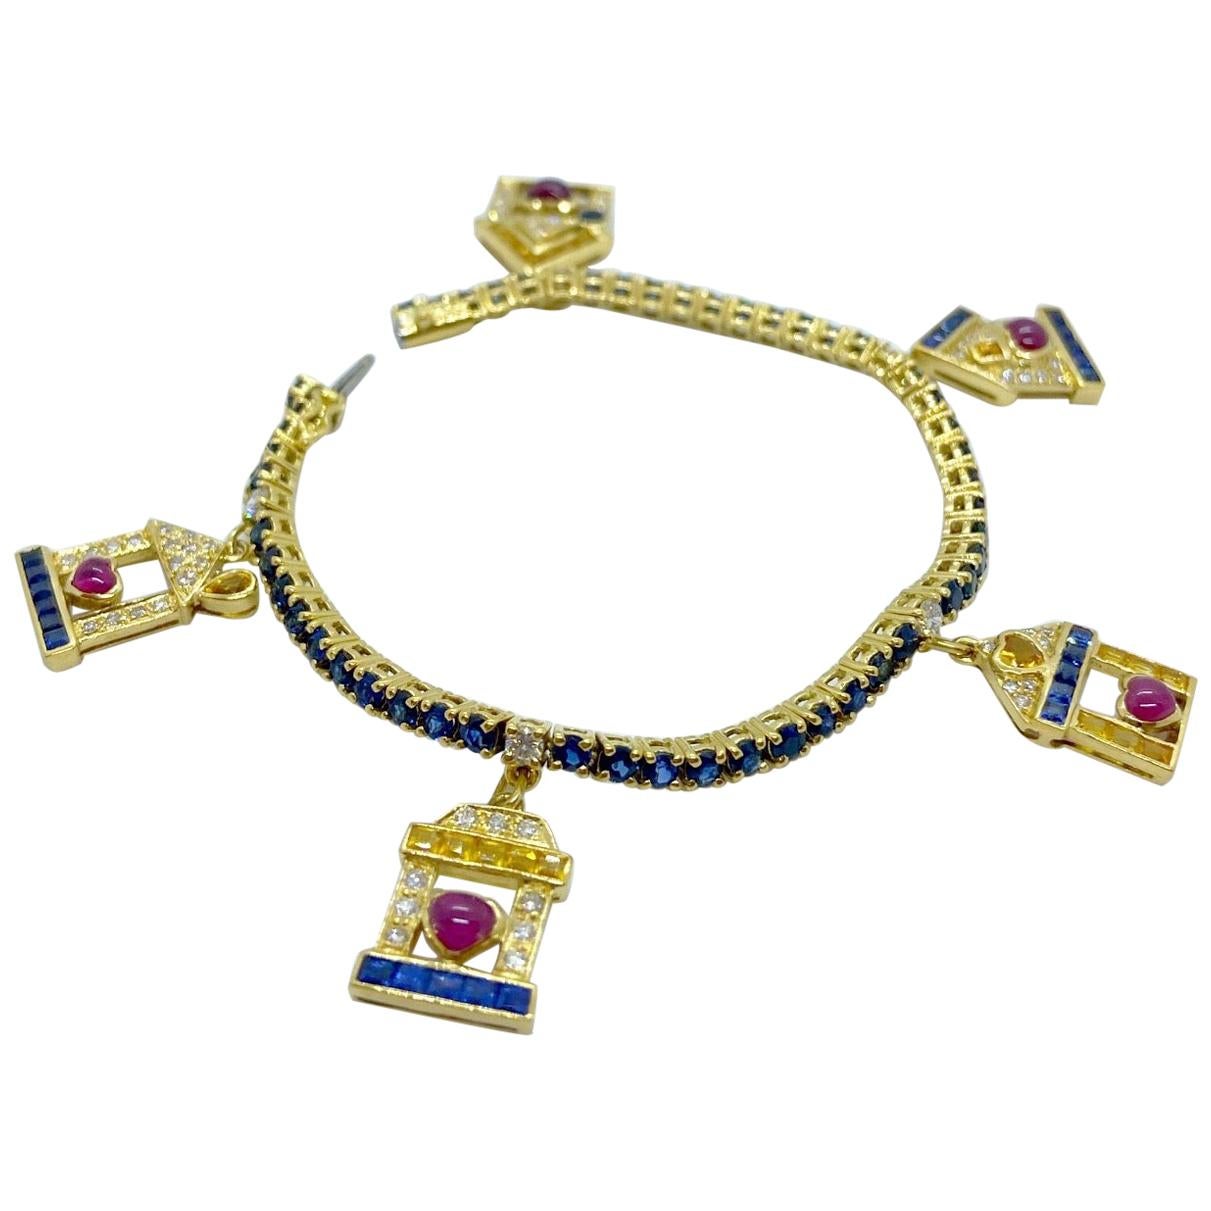 Sabbadini 18 Karat Gold Bracelet with Diamond, Ruby and Sapphire House Charms